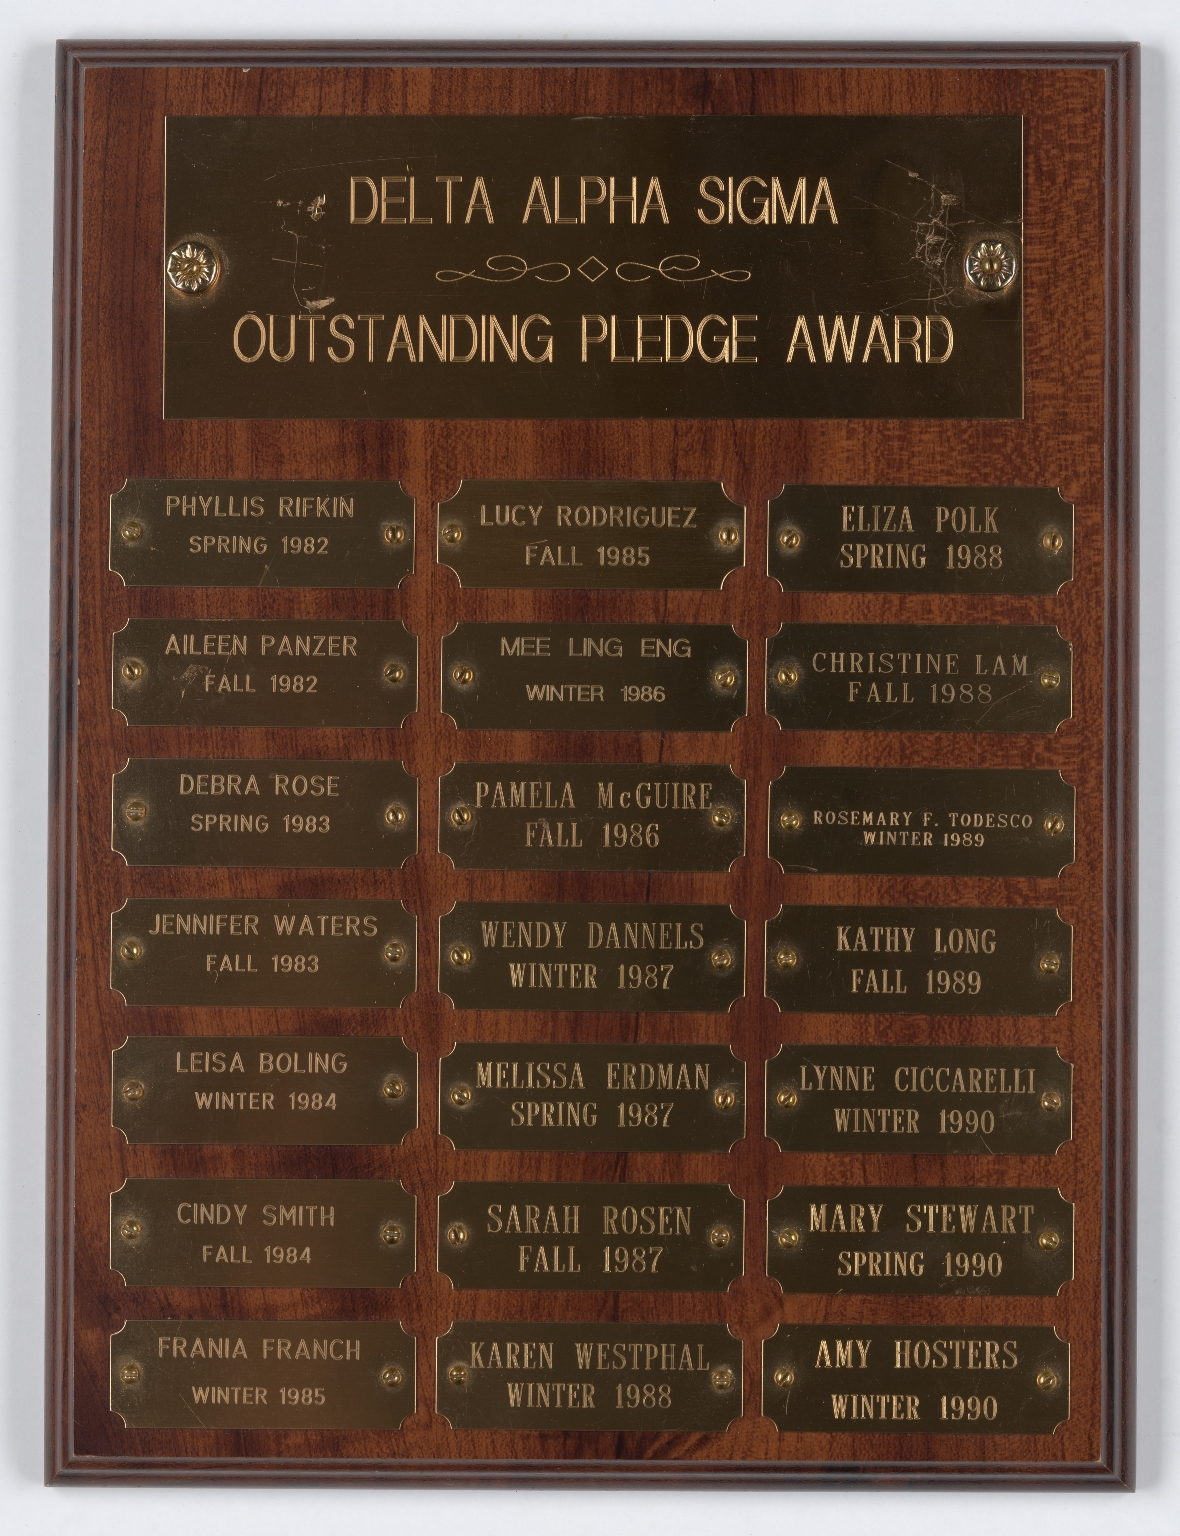 Delta Alpha Sigma Outstanding Pledge Award plaque